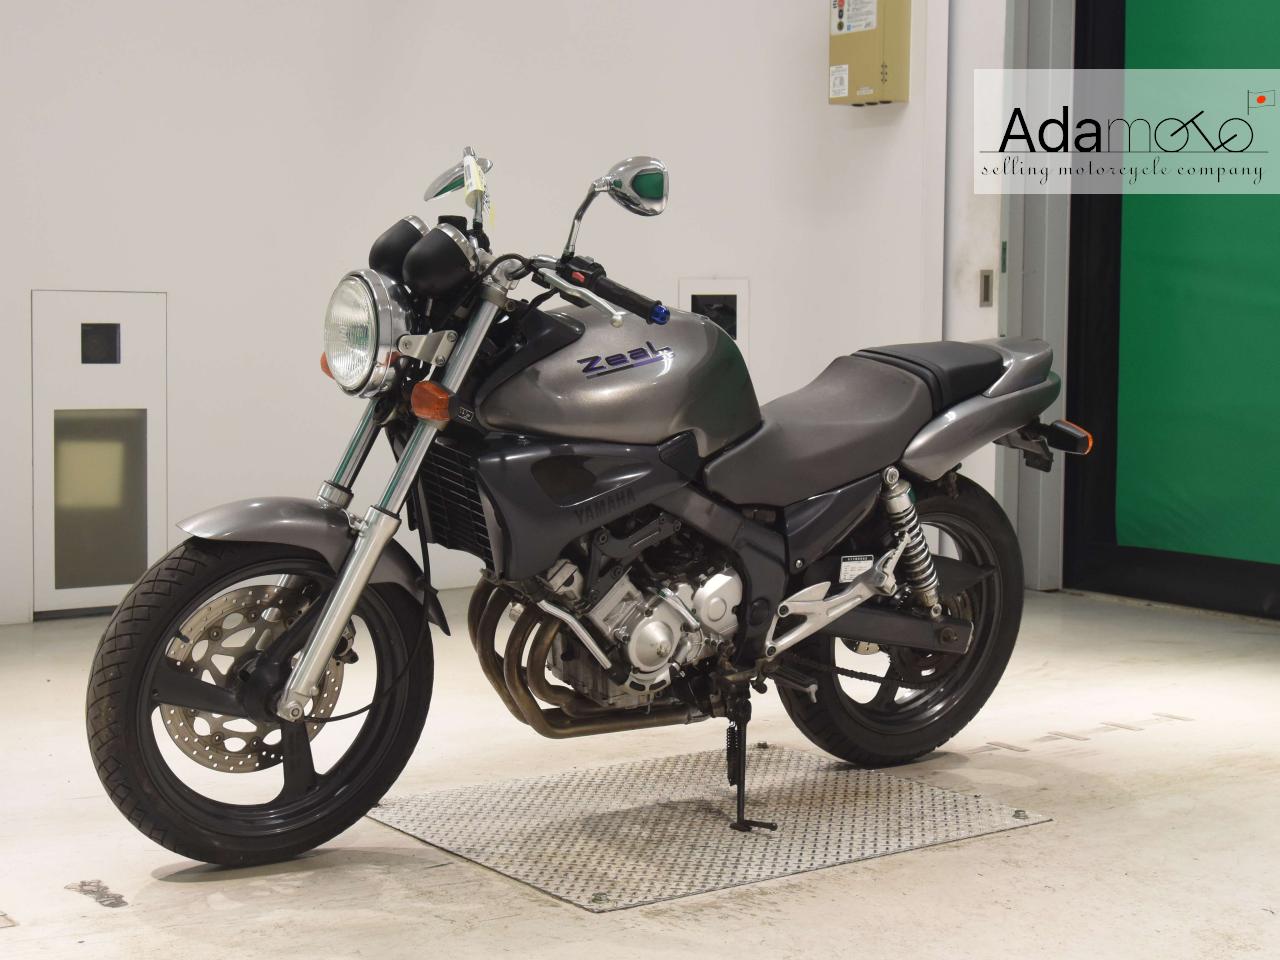 Yamaha ZEAL - Adamoto - Motorcycles from Japan